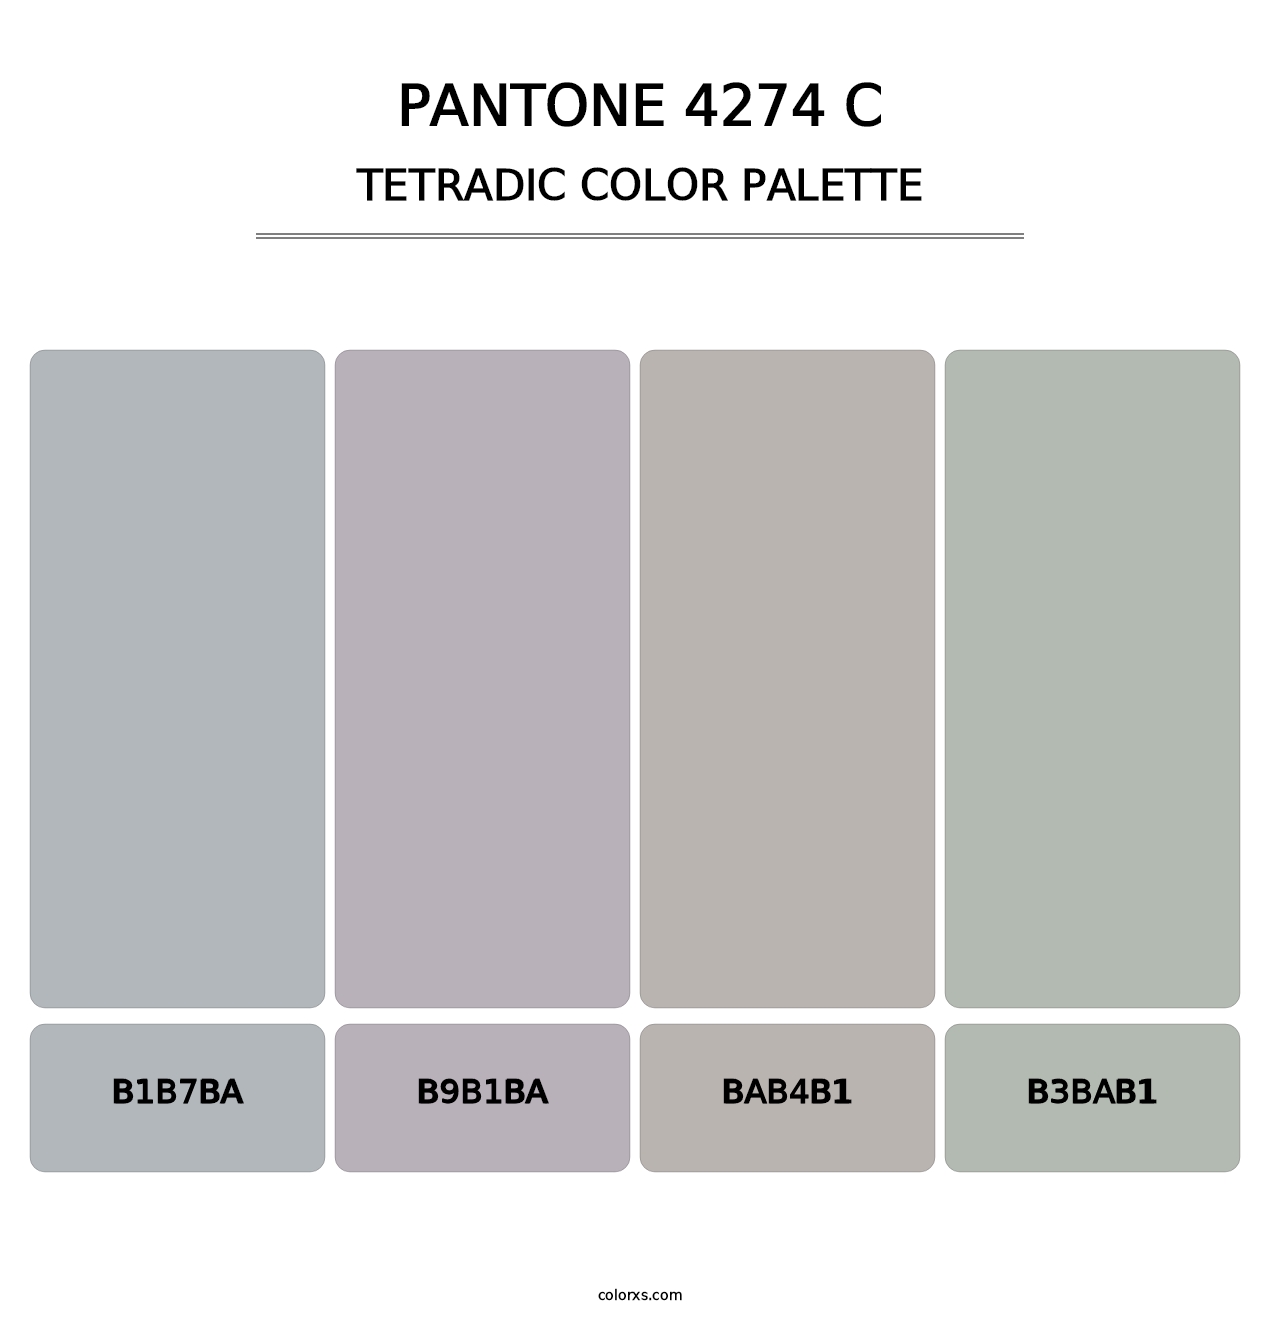 PANTONE 4274 C - Tetradic Color Palette